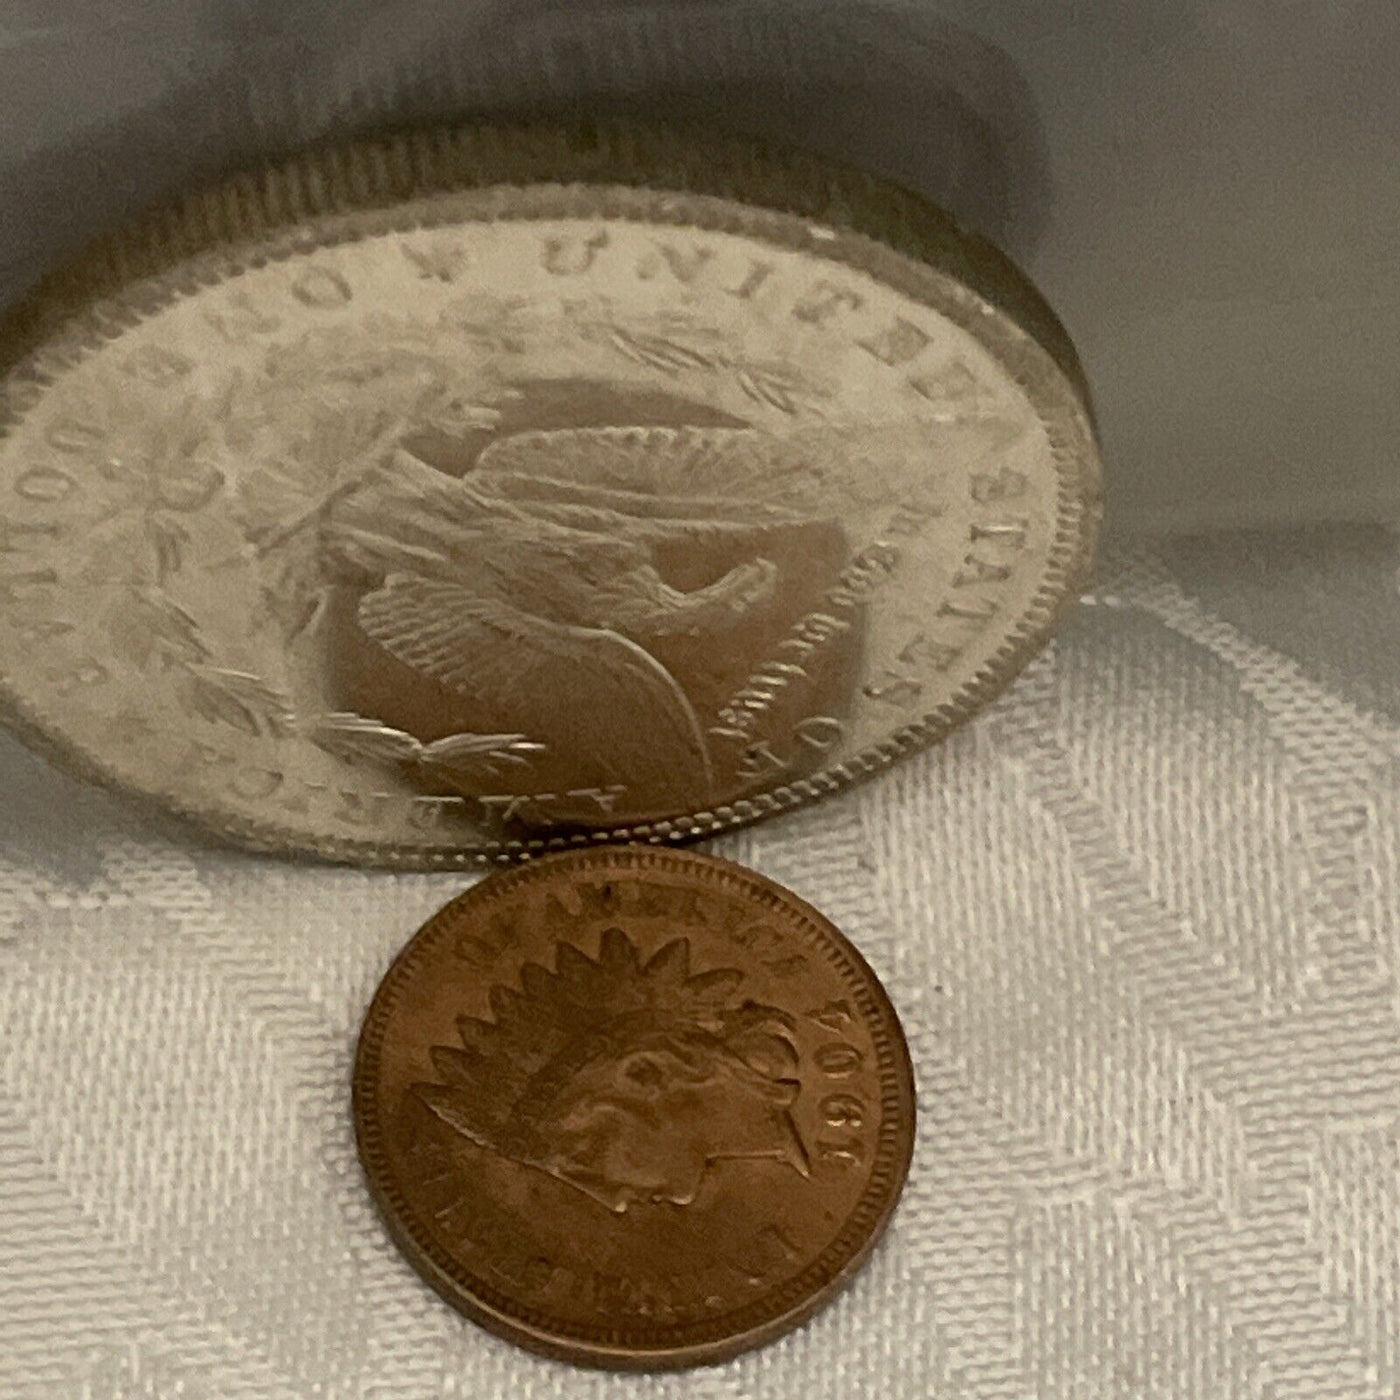 choice BU 1890 0 mirror proof like astounding coin!